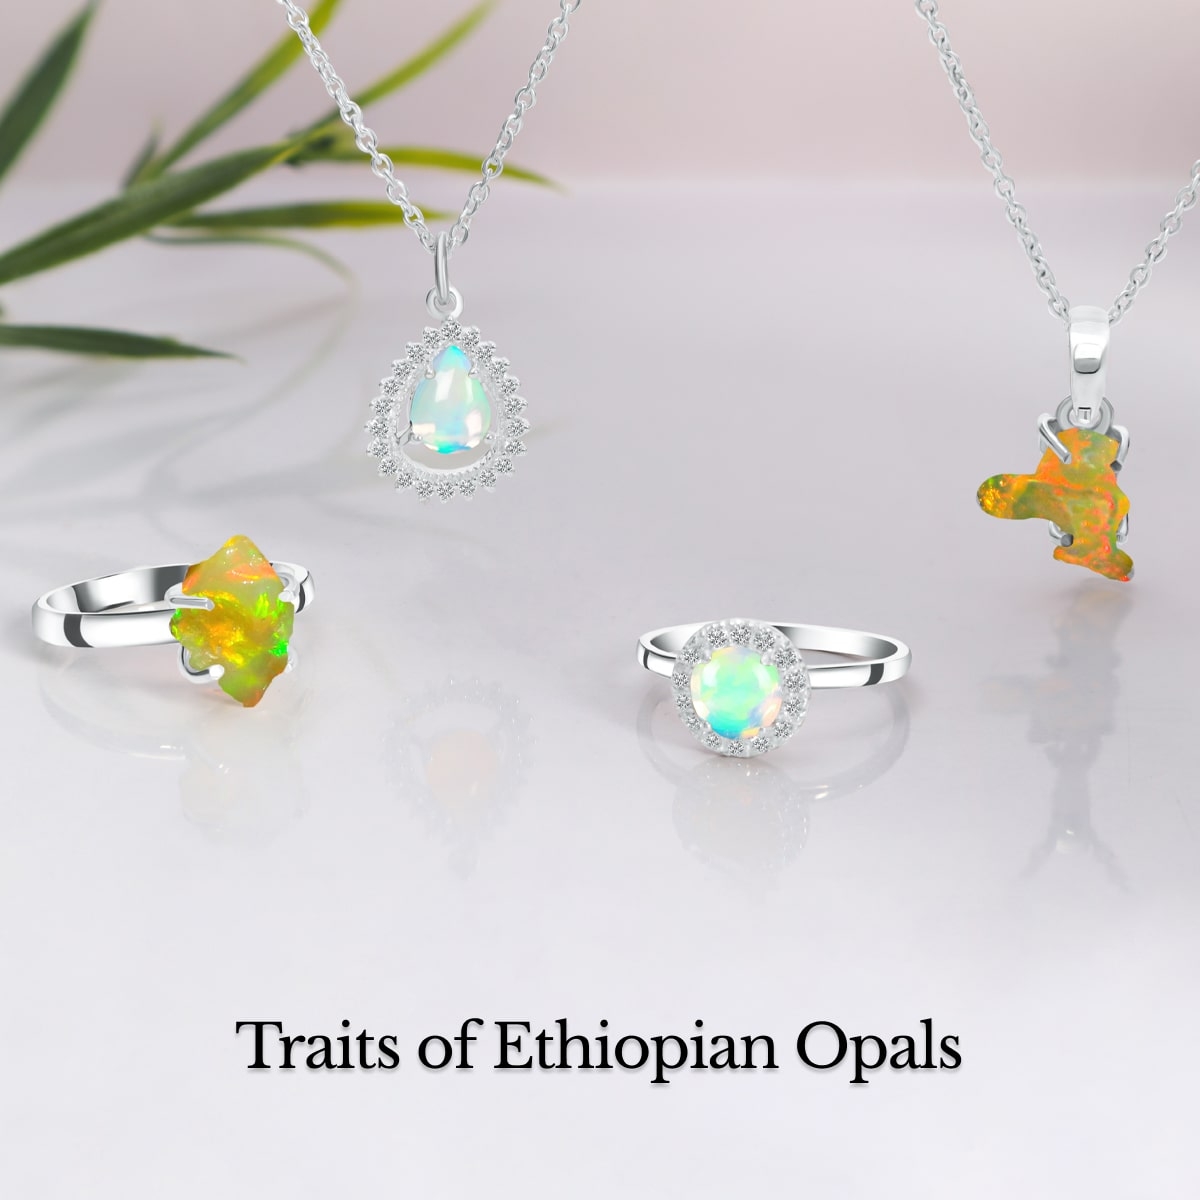 Ethiopian Opals' features